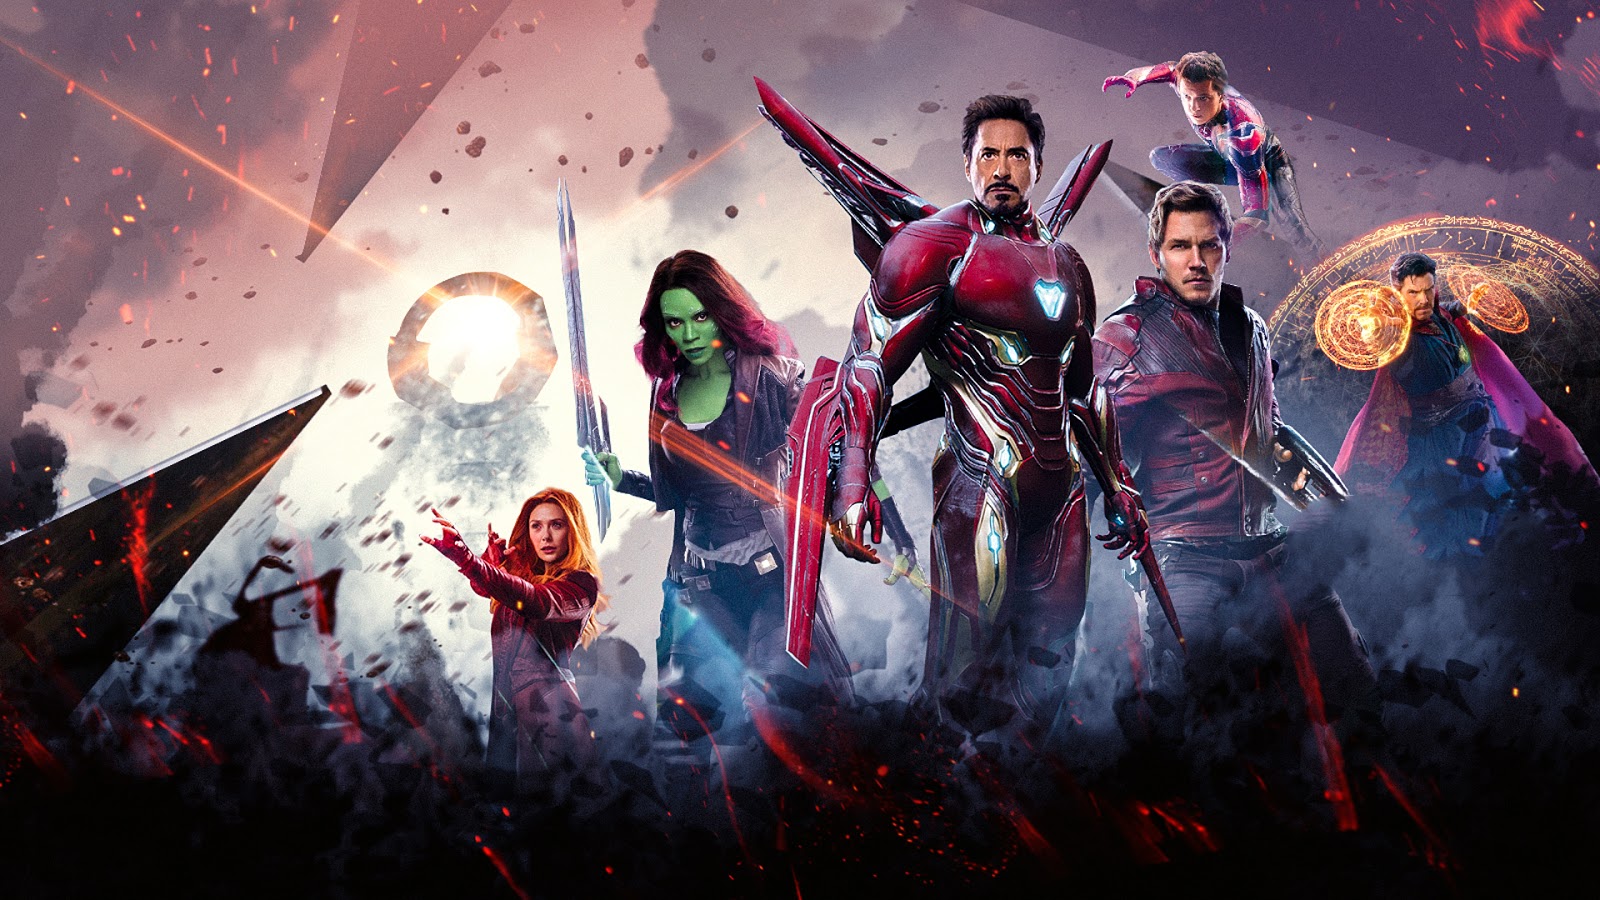 Marvel Studios Avengers Infinity War HD 4k Wallpaper Of Iron Man